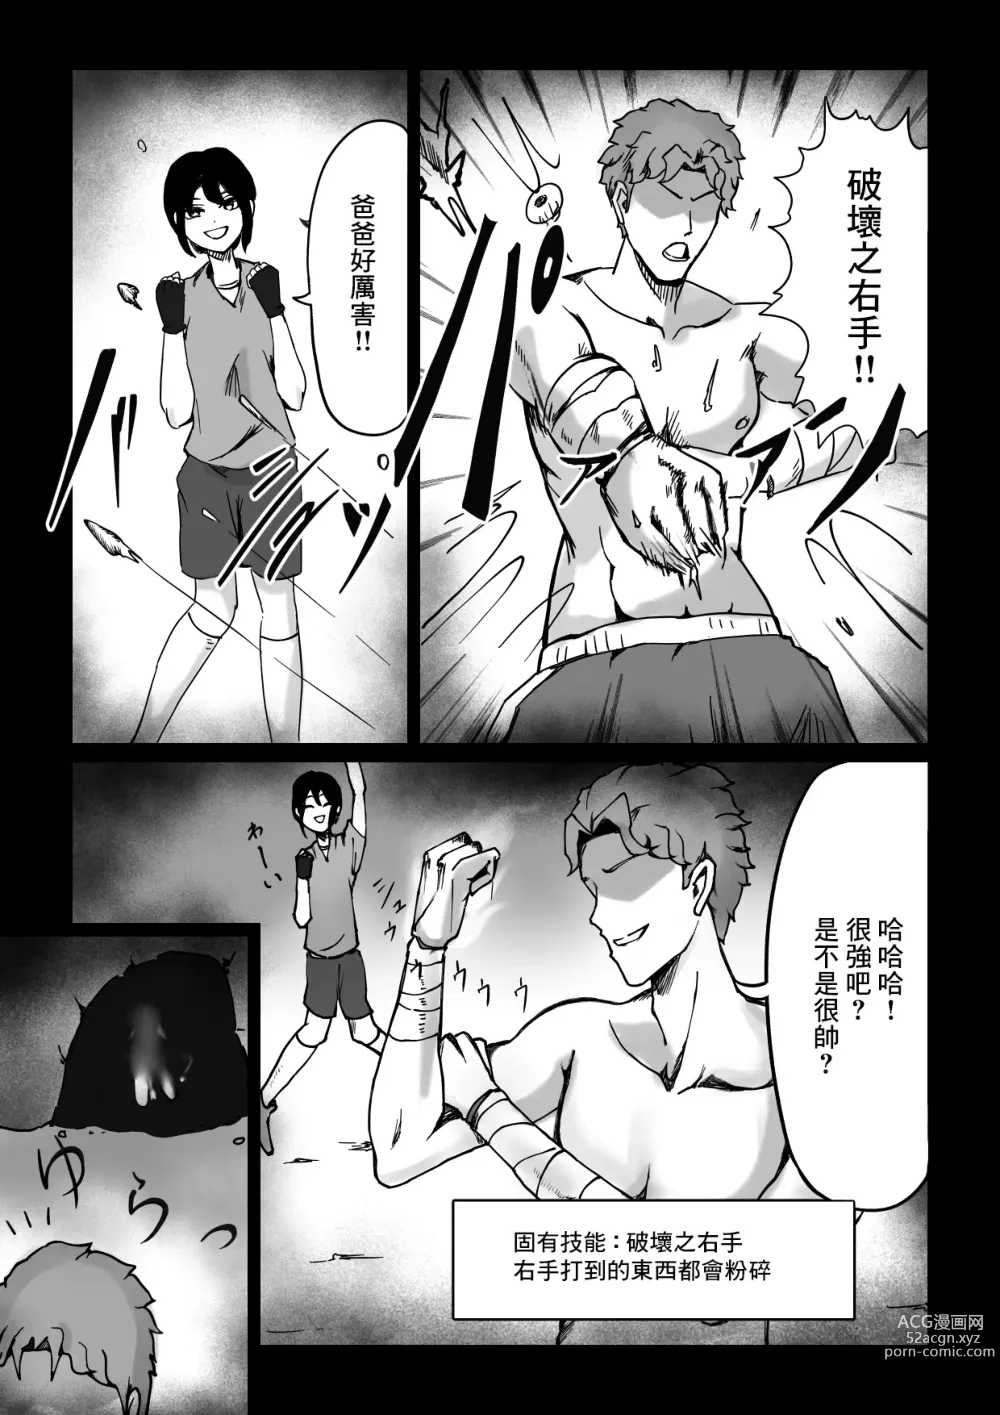 Page 2 of doujinshi 最強的爸爸就在我眼前被淫魔給將技能給榨取過去的故事